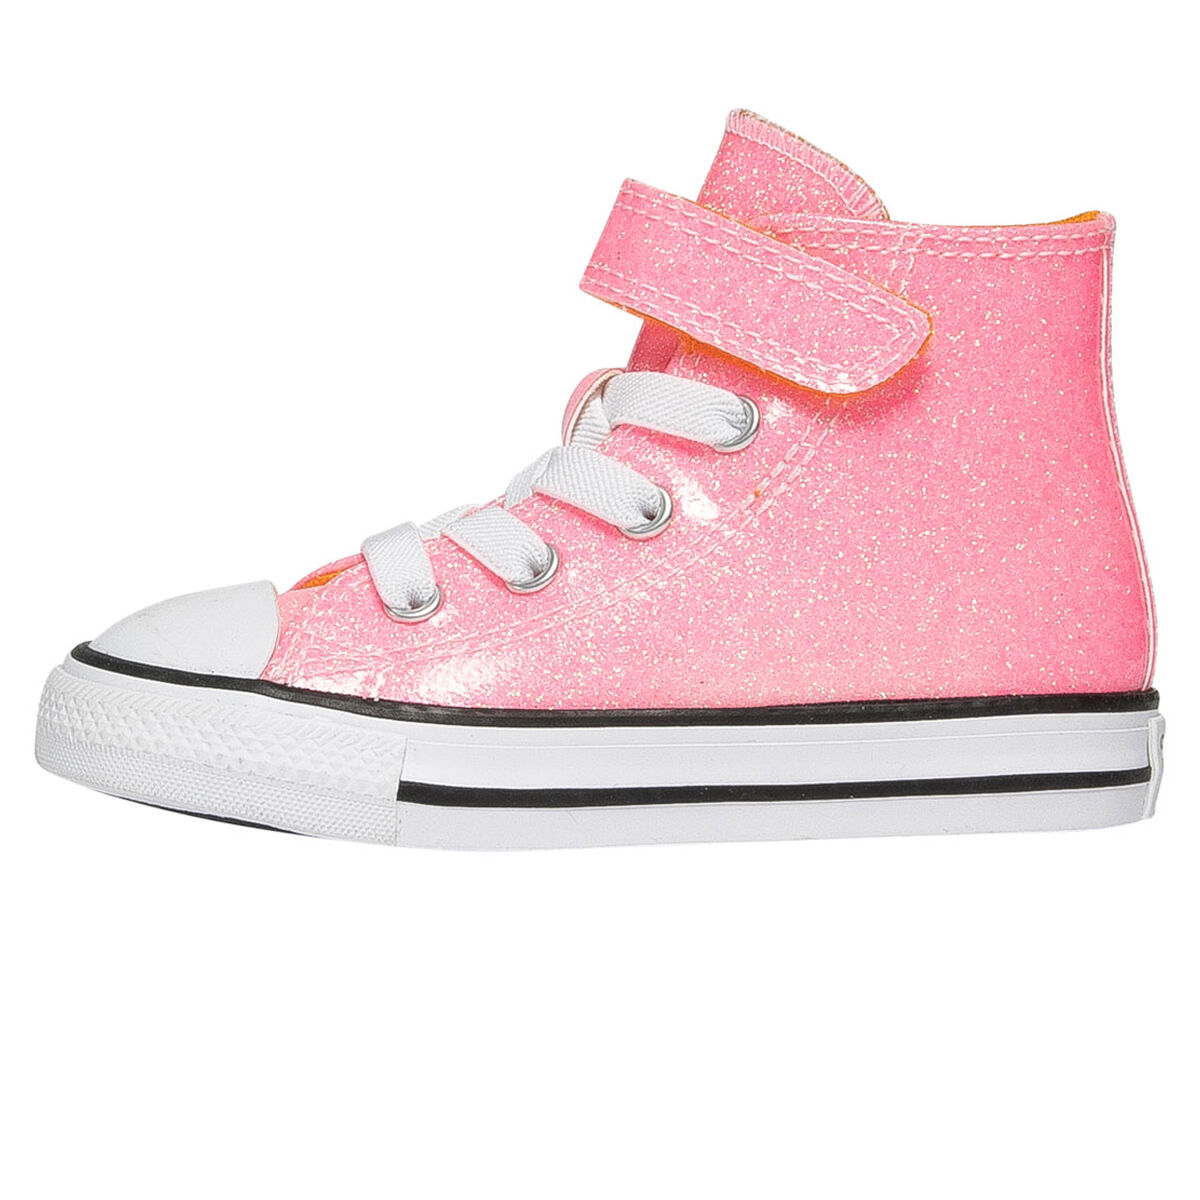 KIDS FASHION Footwear Elegant discount 63% Pink 35                  EU Converse trainers 